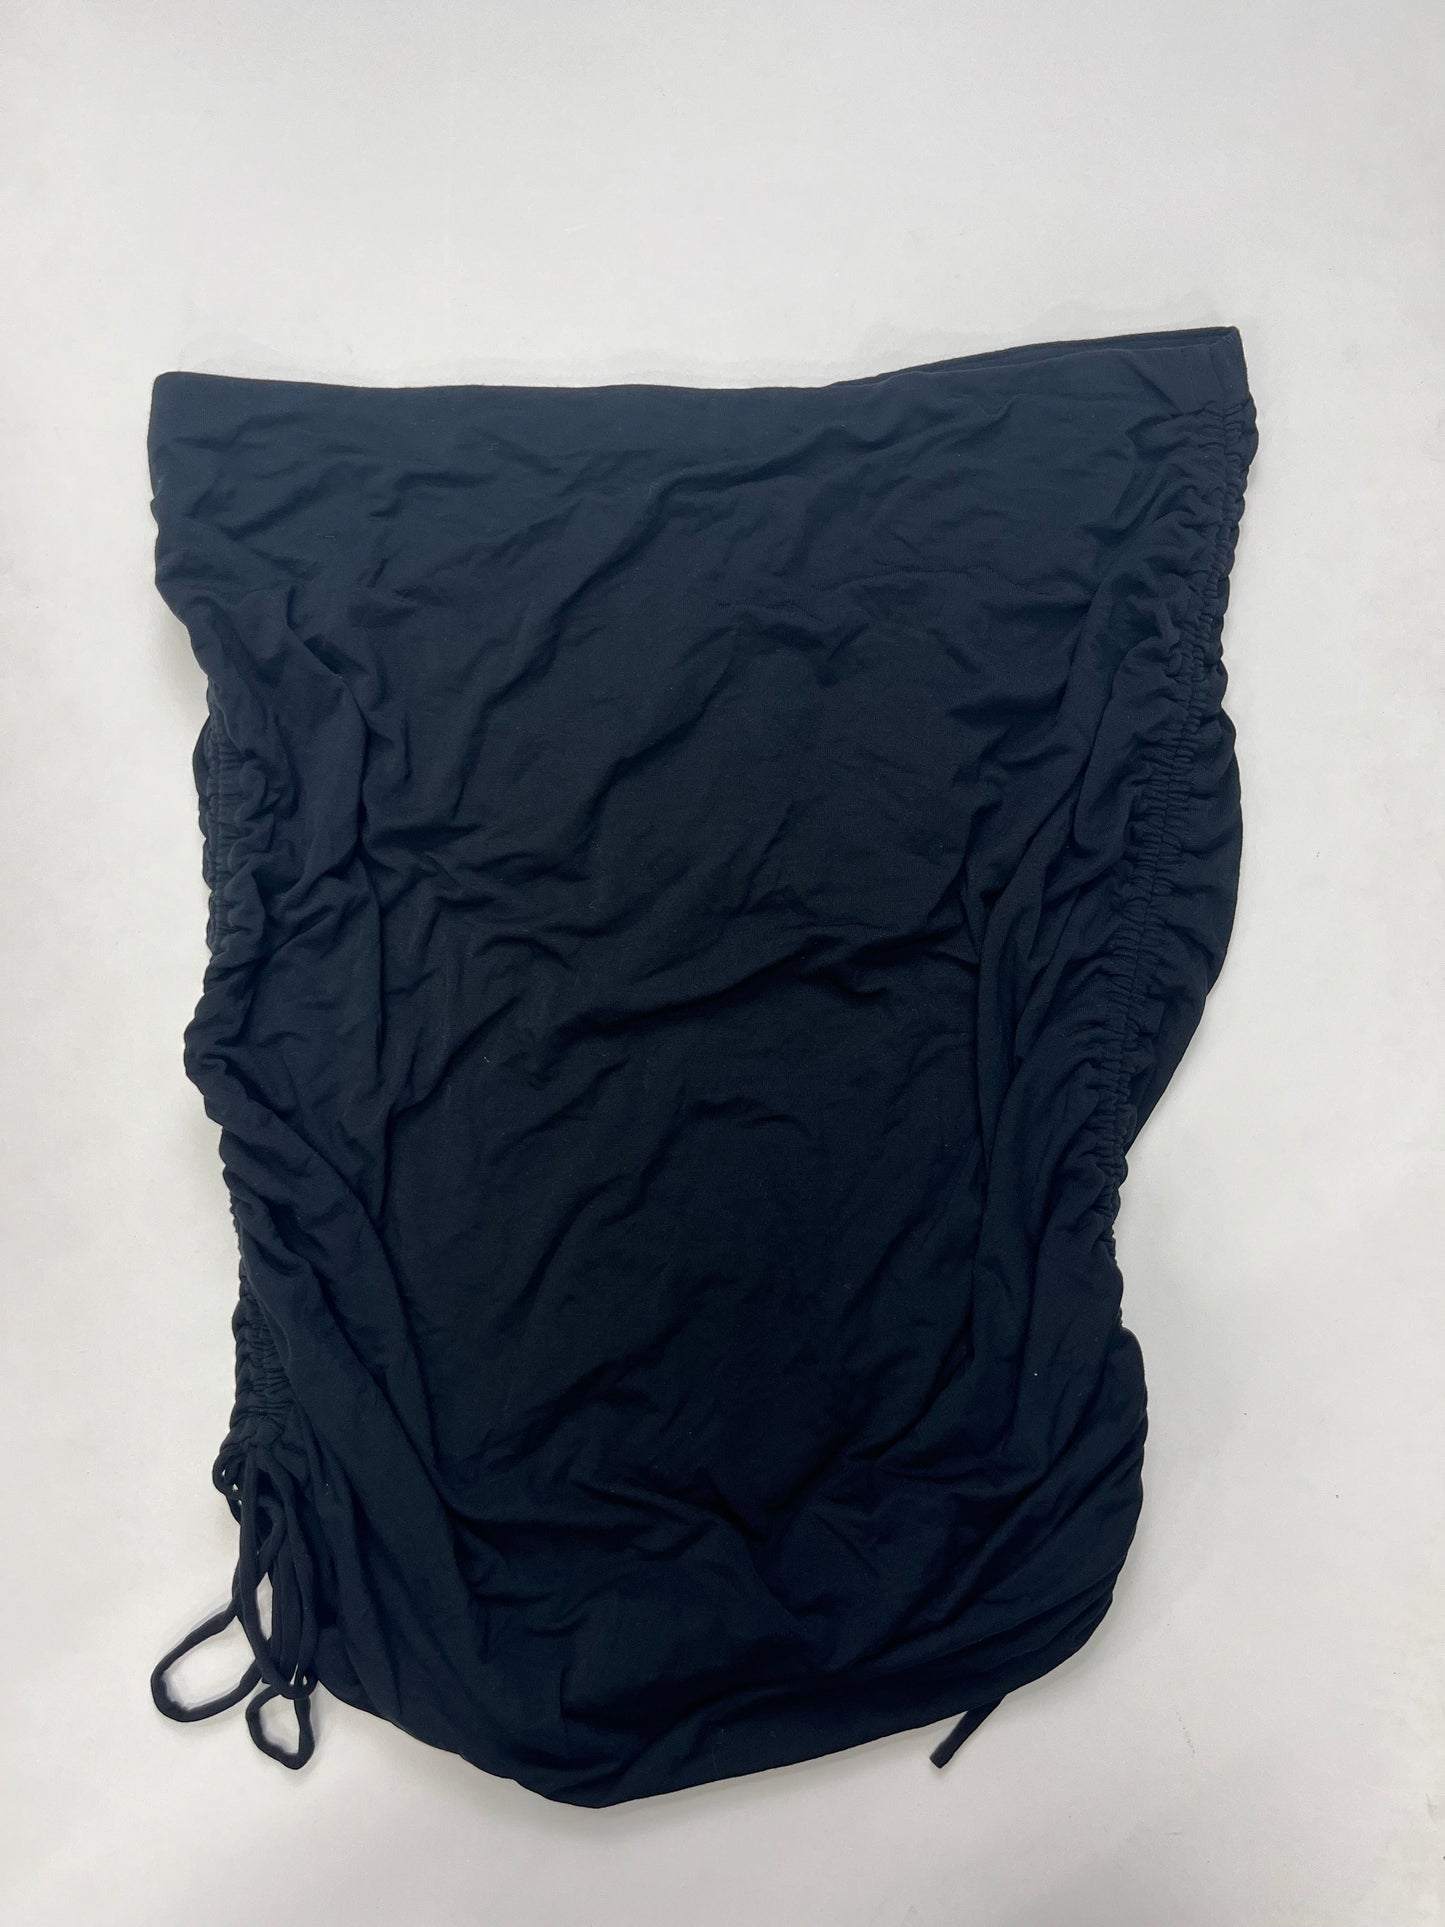 Black Skirt Midi New York And Co, Size Xl